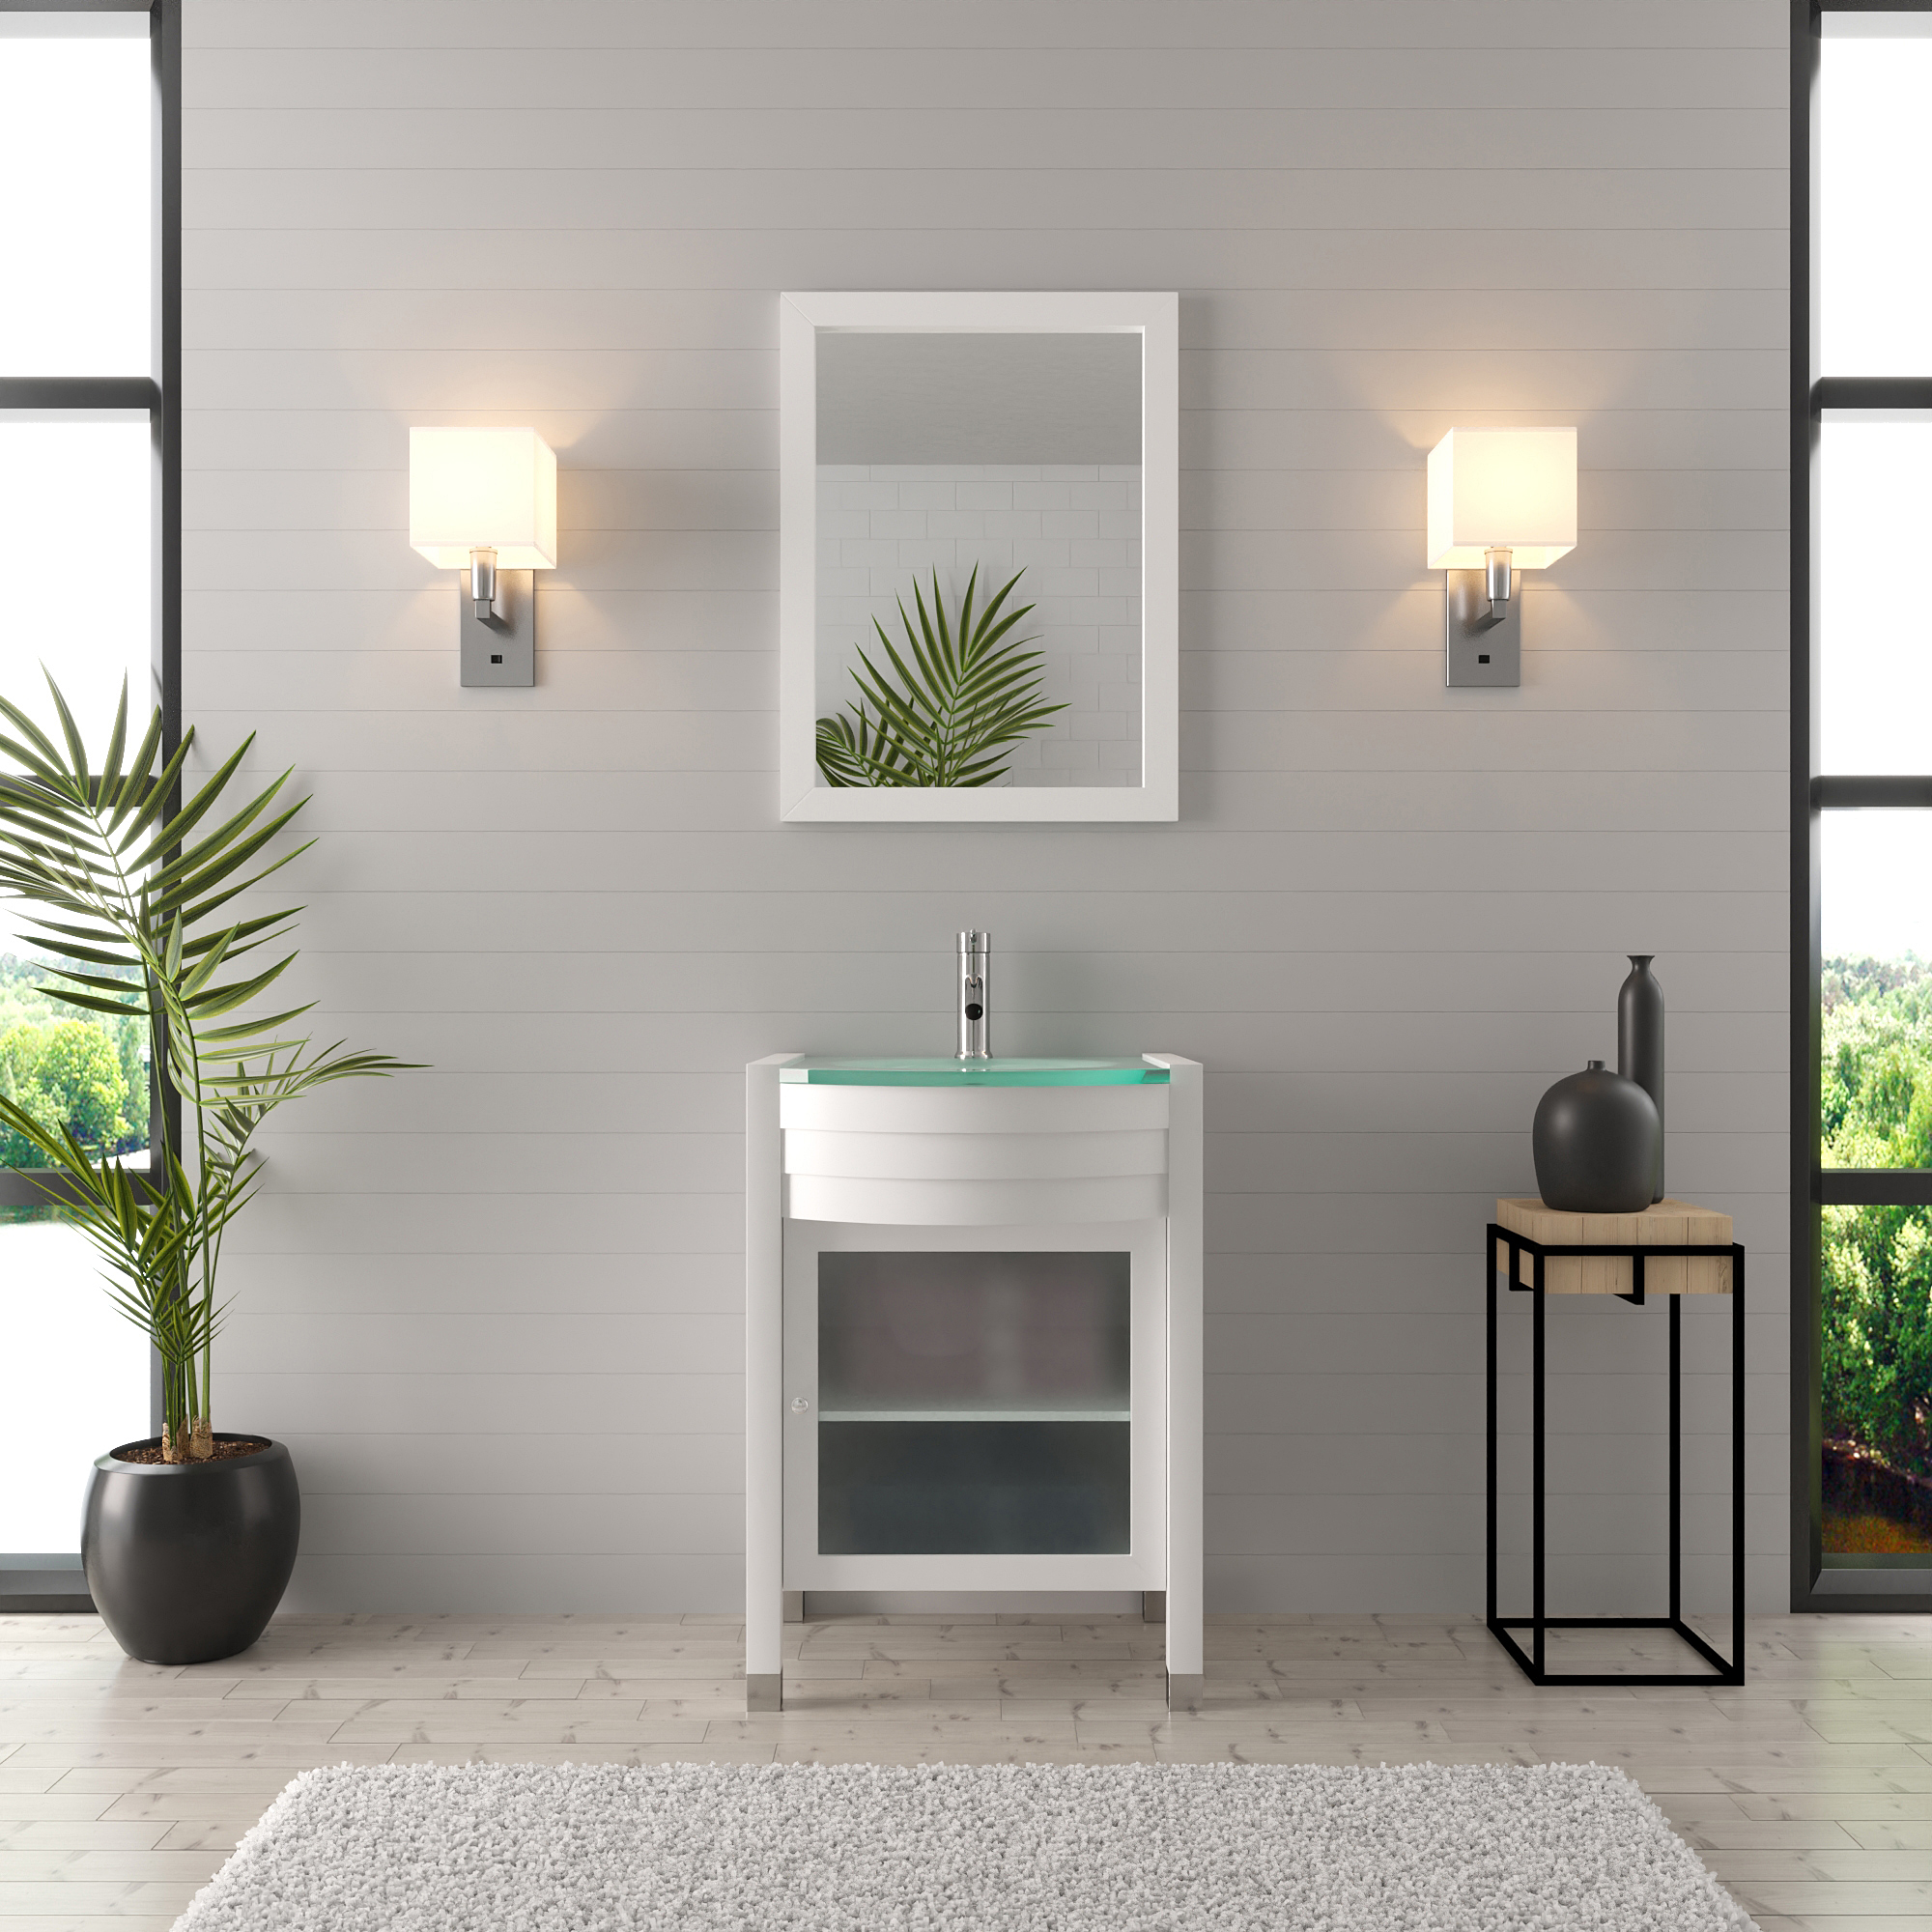 The Ava single sink small Bathroom Vanity by Virtu